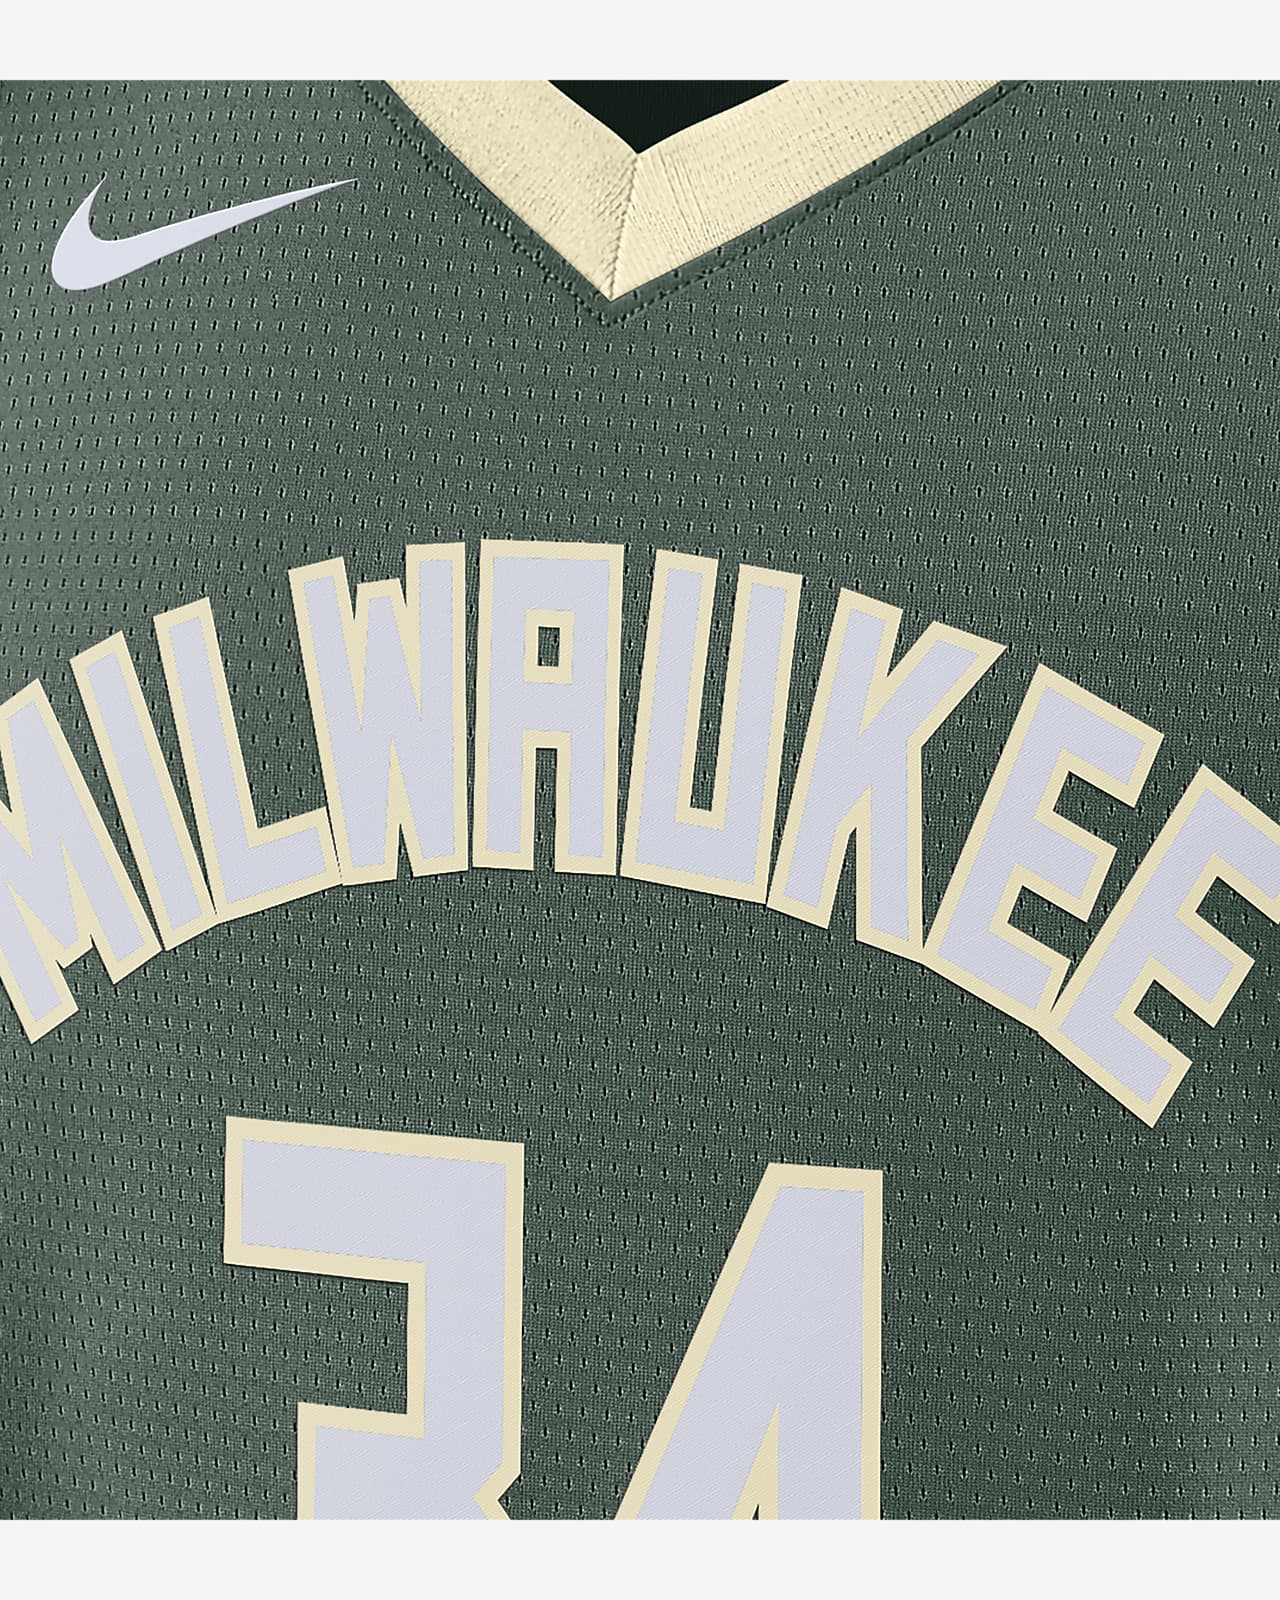 Nike Youth Milwaukee Bucks Giannis Antetokounmpo #34 Dri-Fit Swingman Jersey - Black - S Each